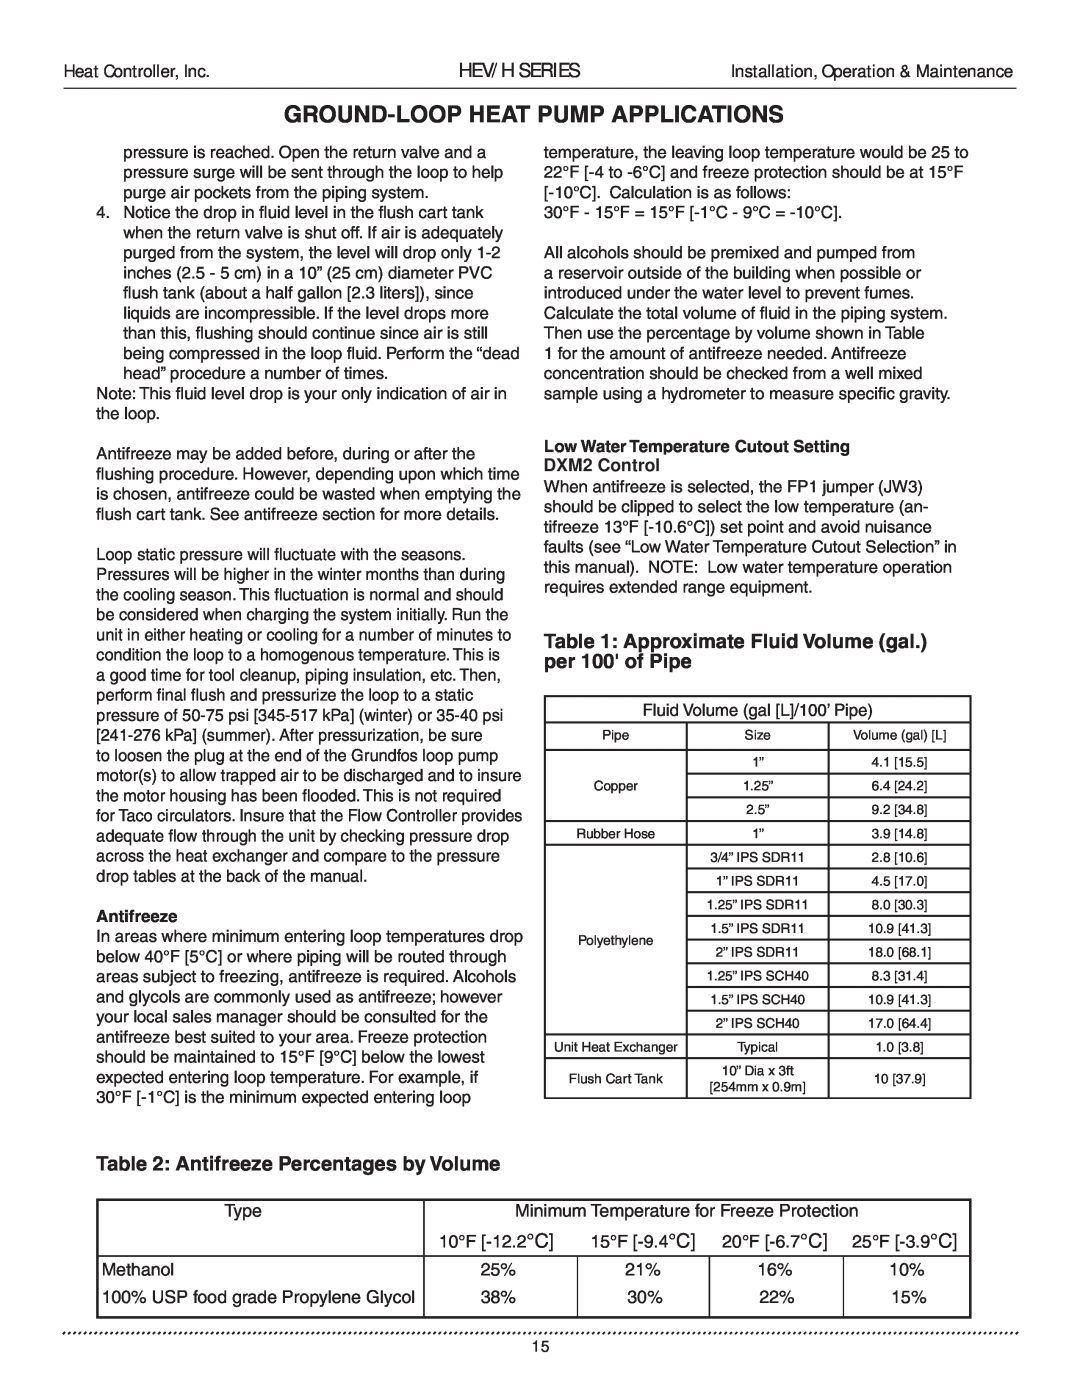 Heat Controller HEV/H Ground-Loopheat Pump Applications, Hev/H Series, Antifreeze Percentages by Volume, DXM2 Control 